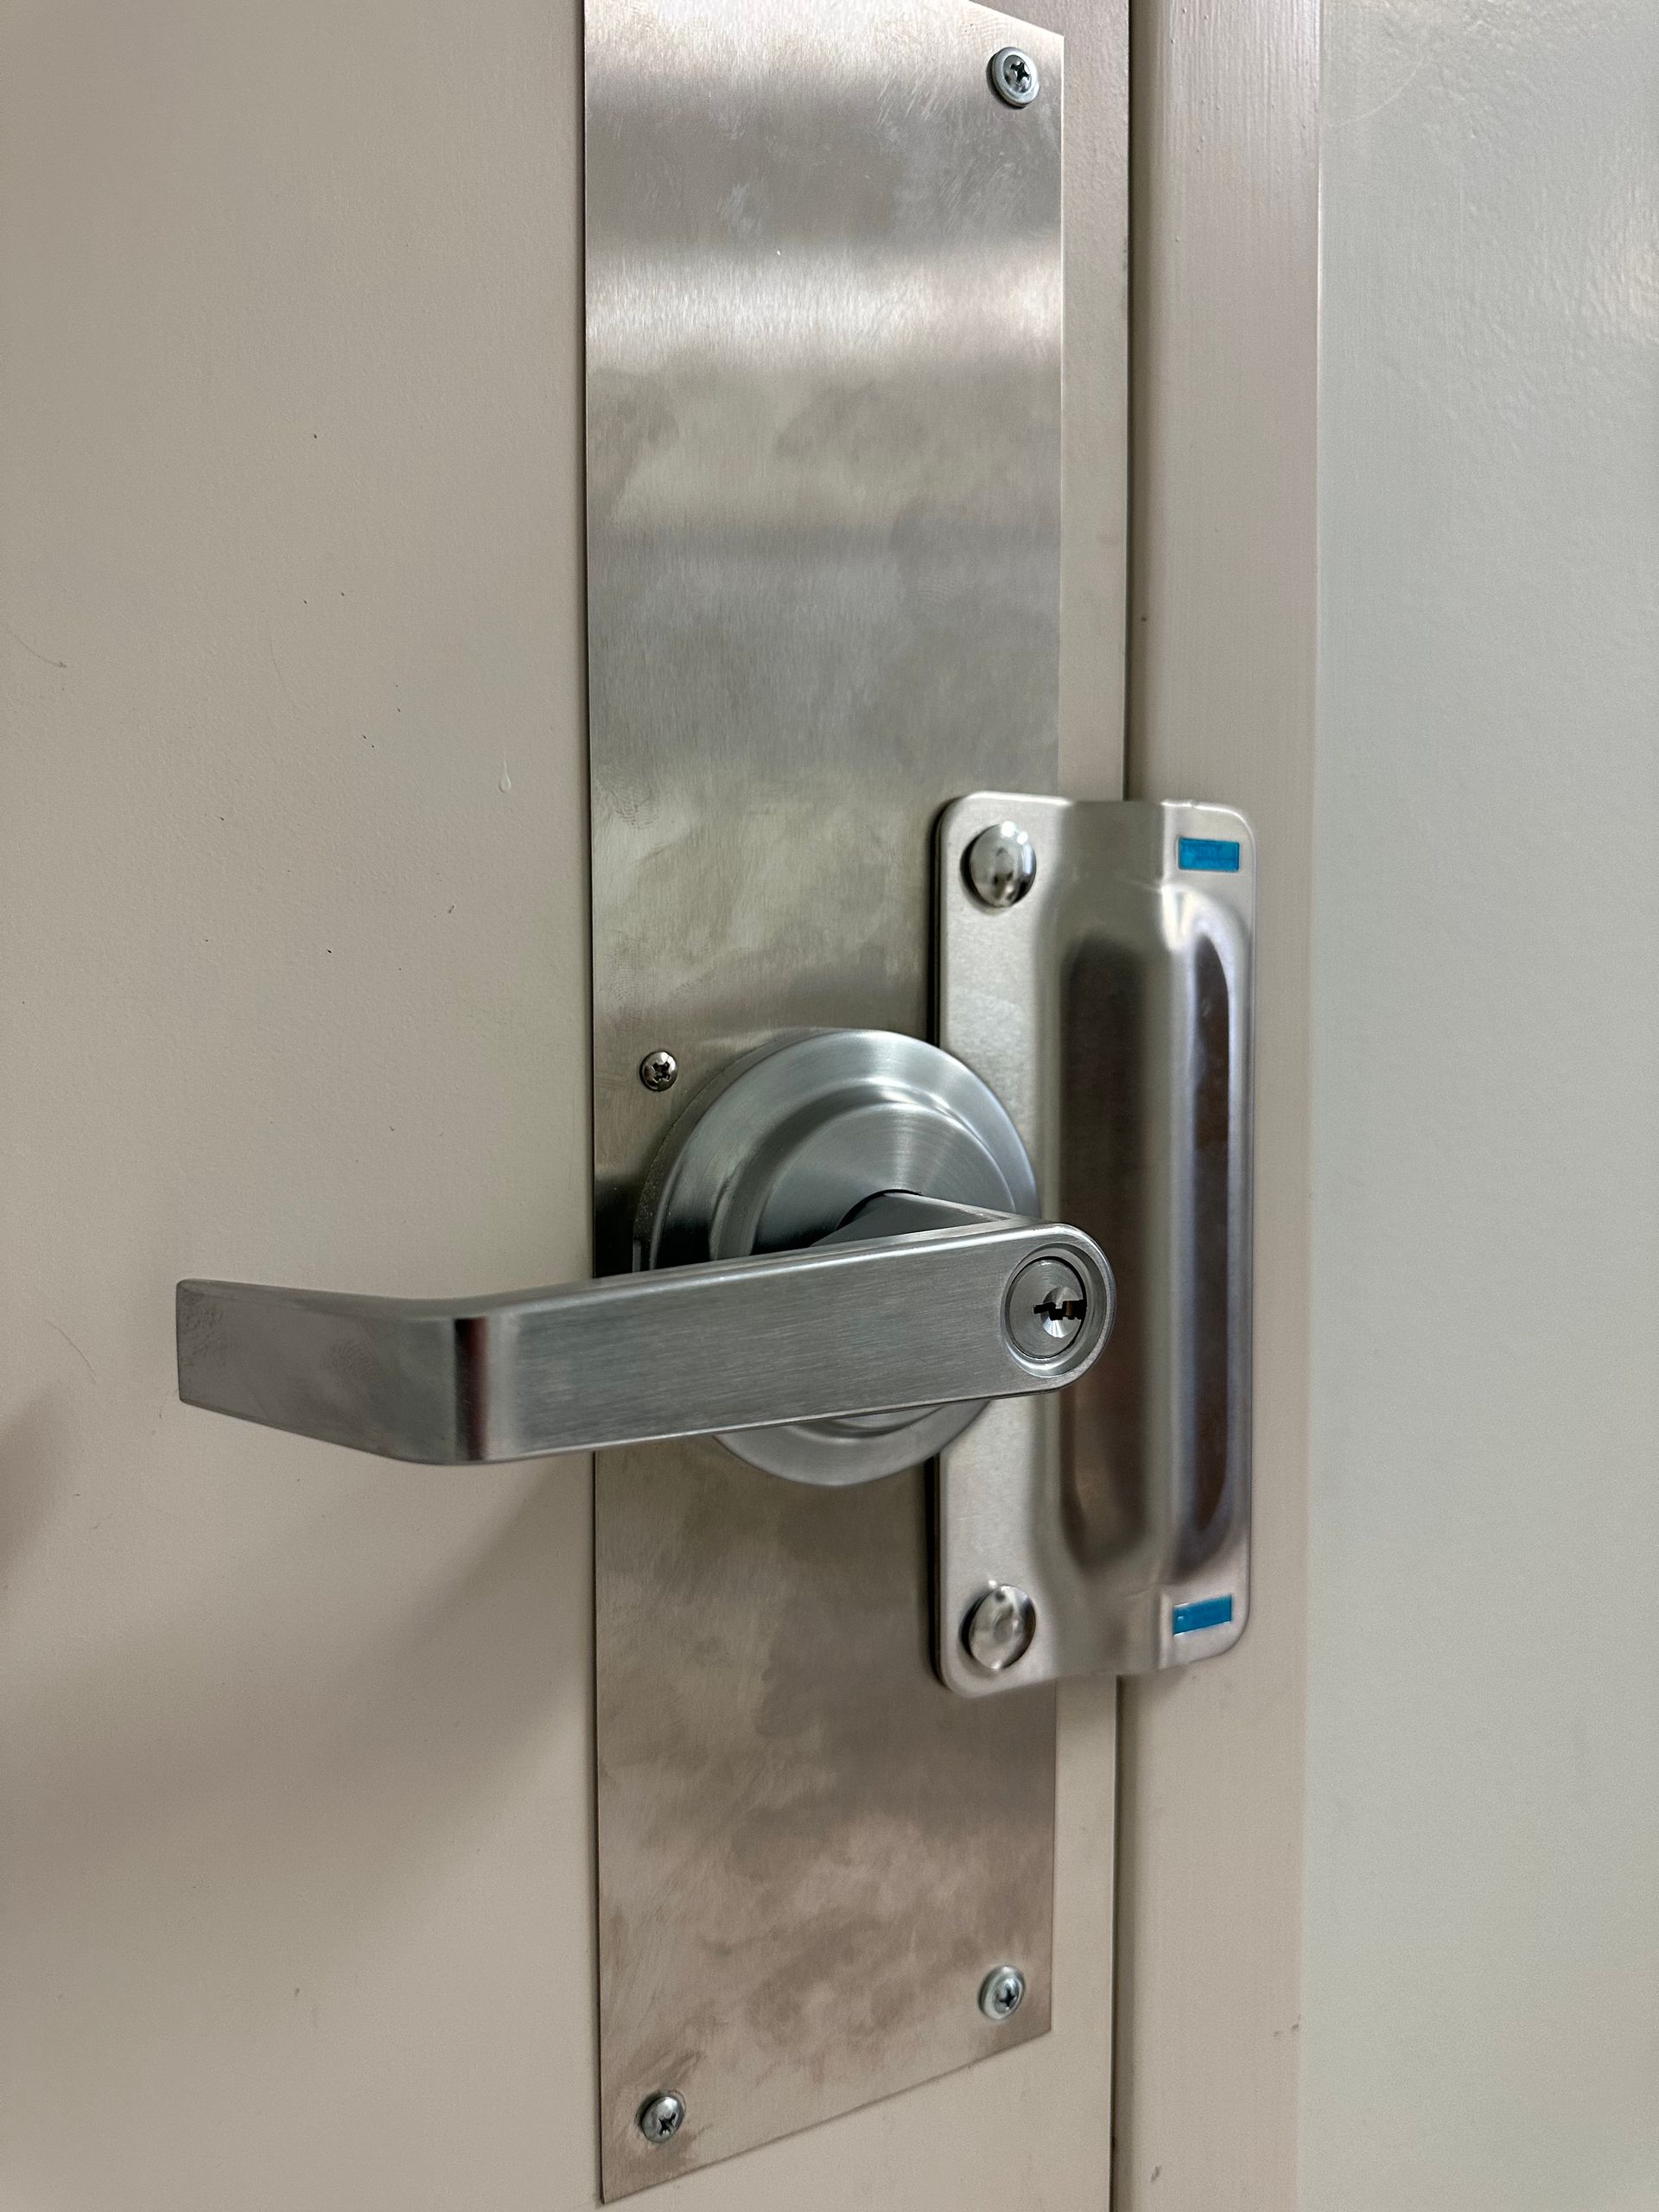 A high-security lock